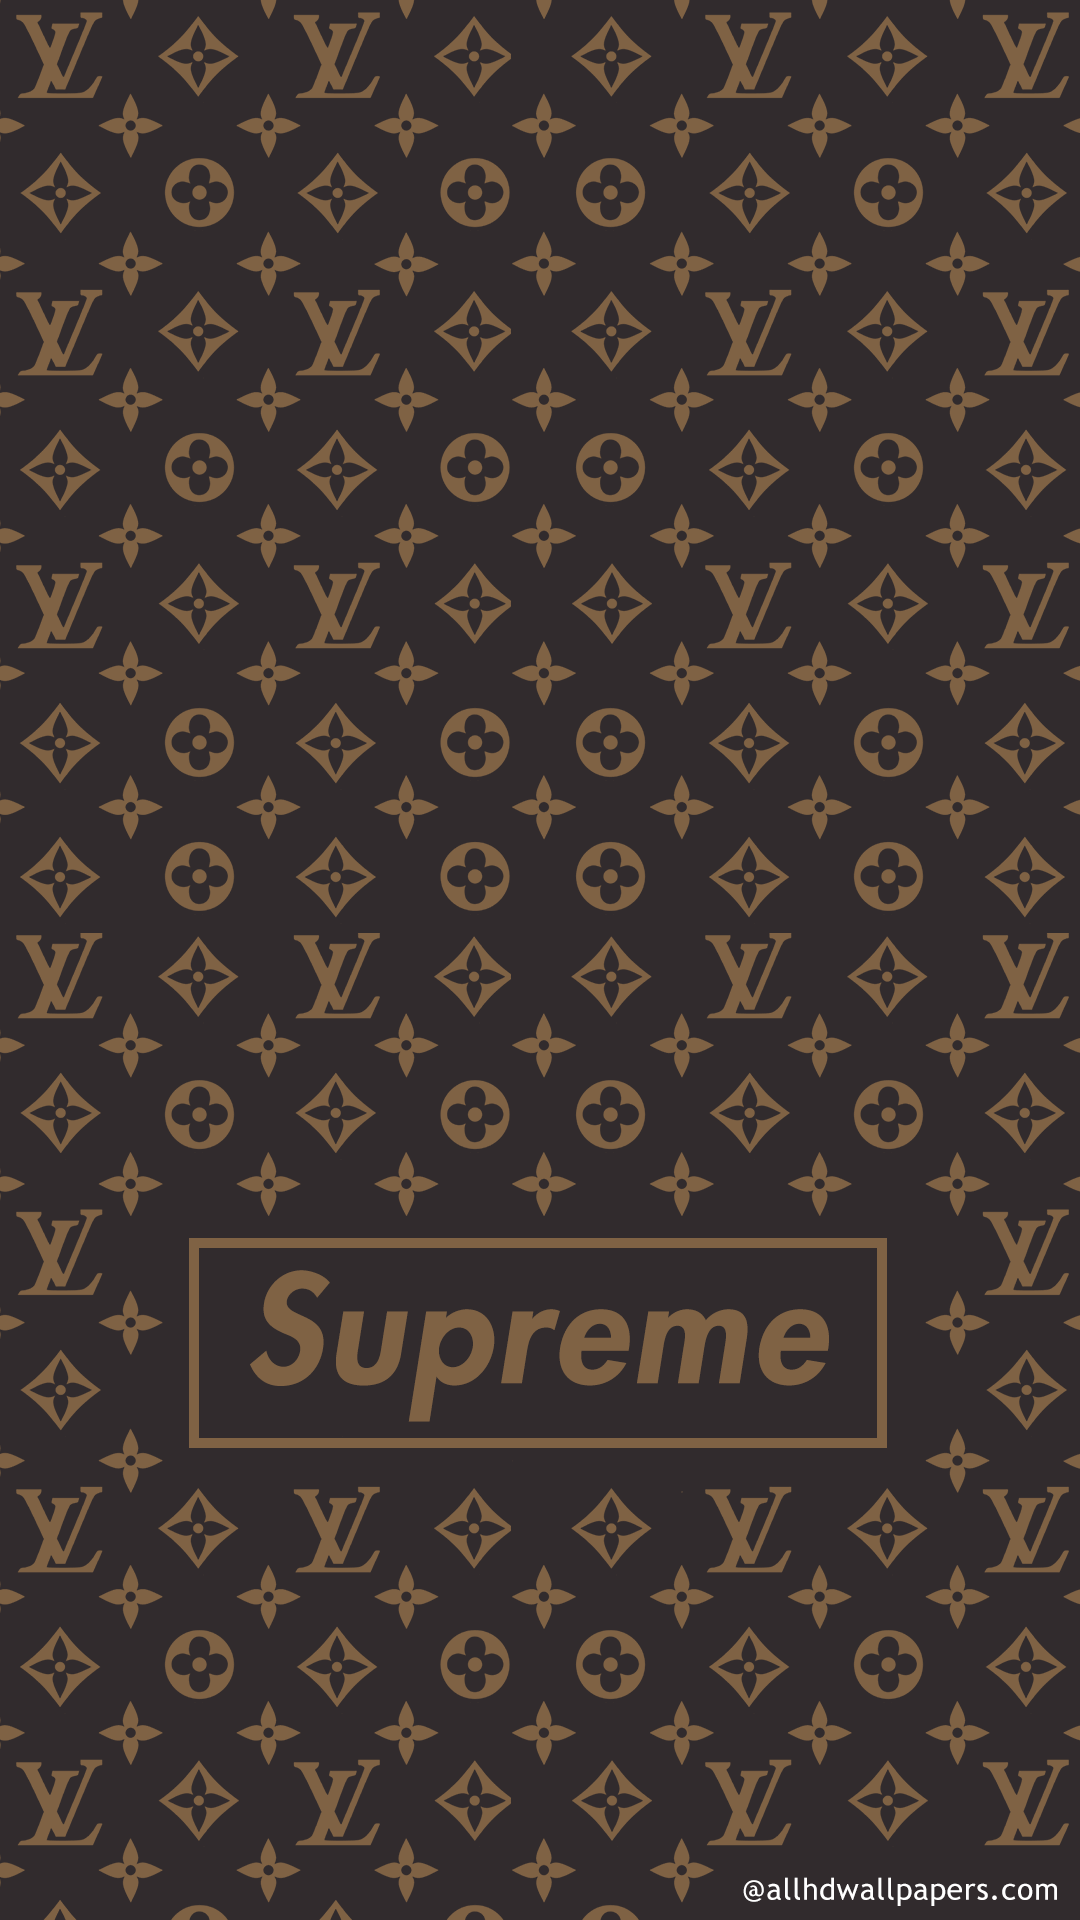 Supreme Wallpaper in 4K. Supreme